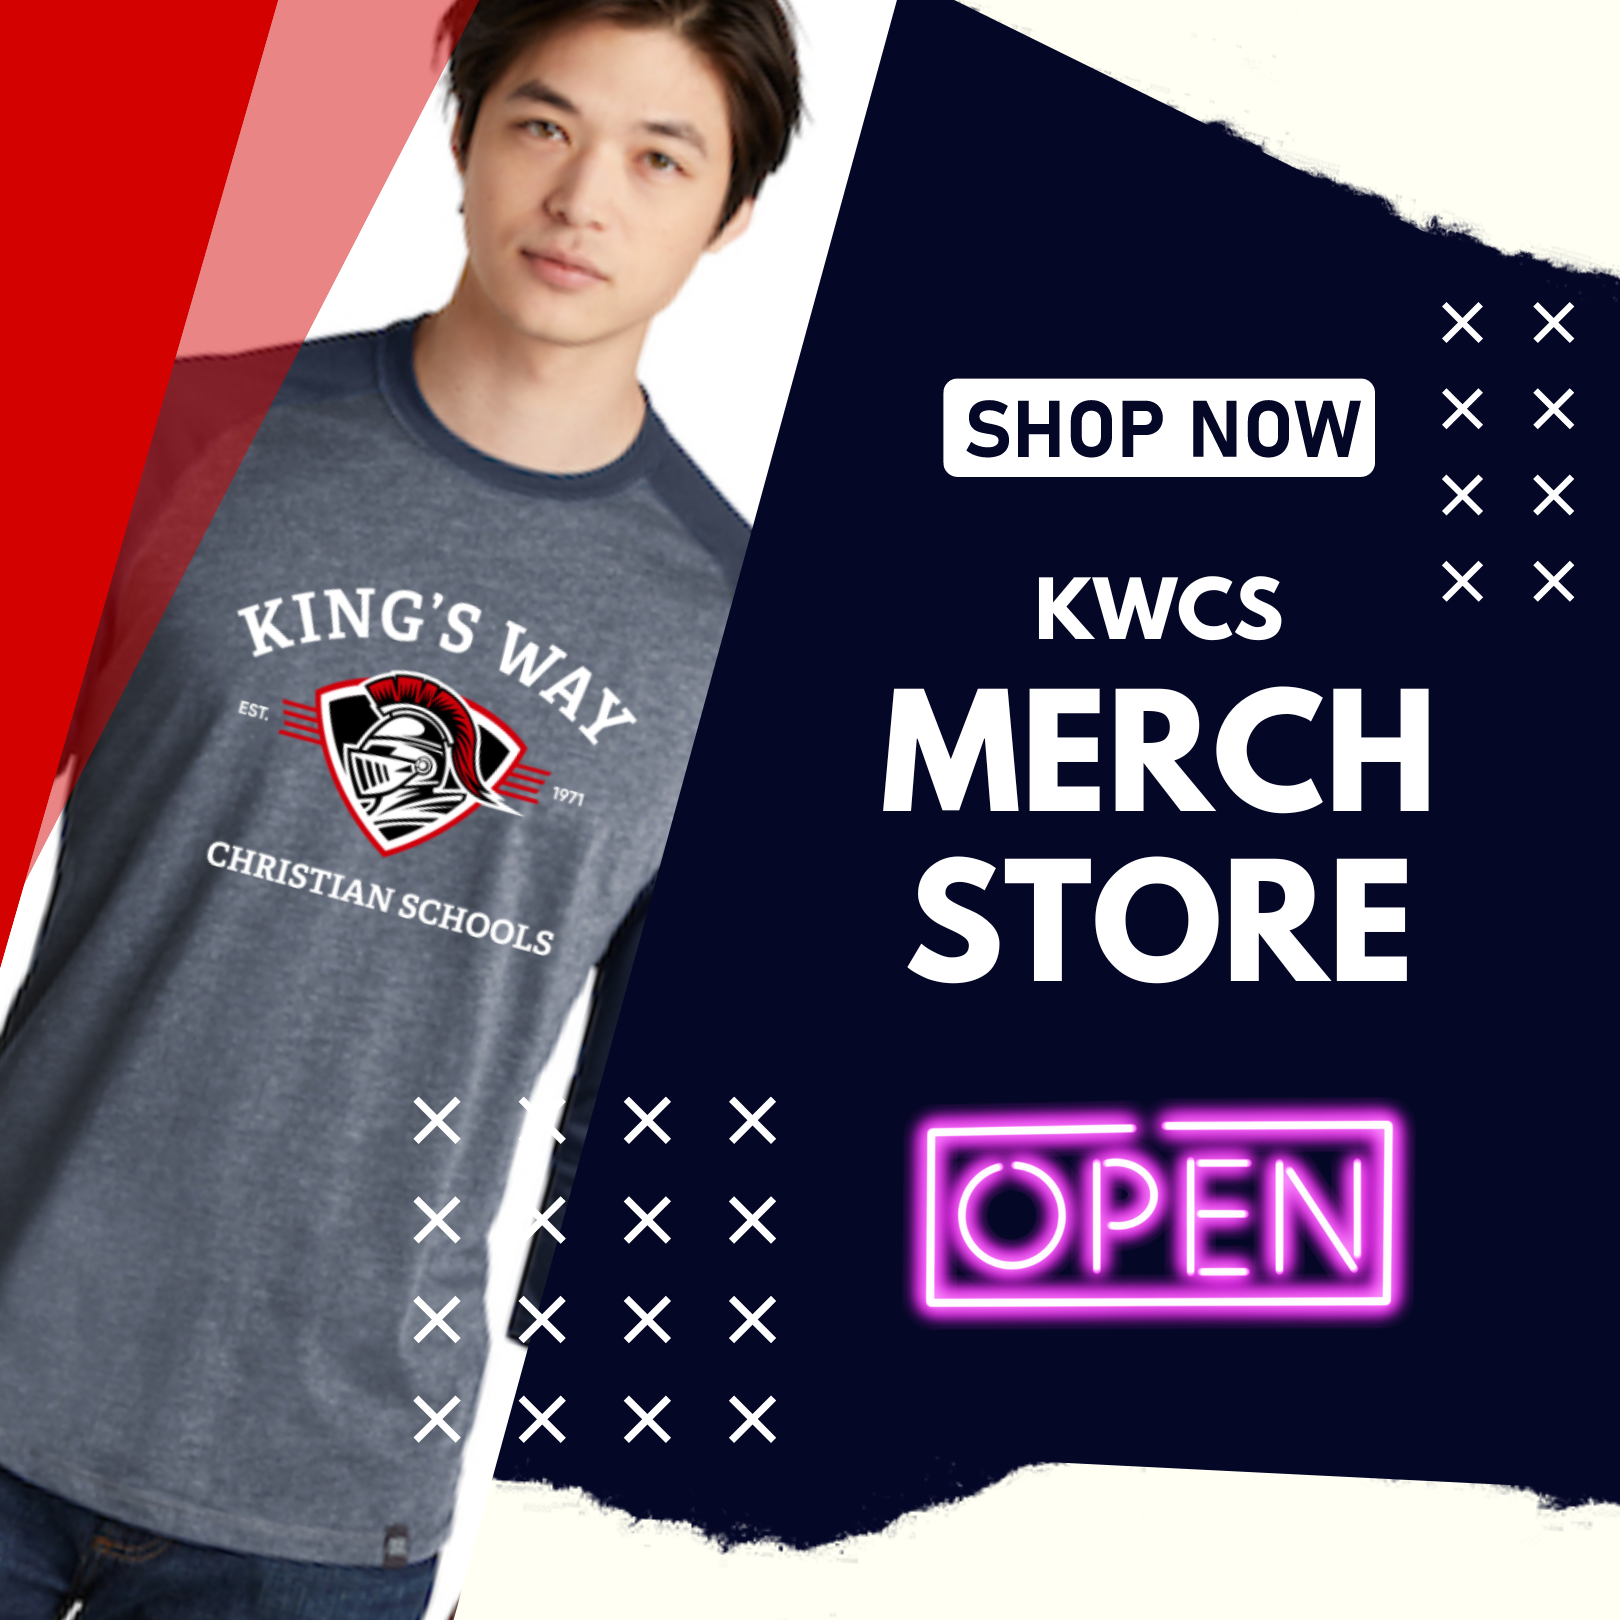 King's Way Merch Store